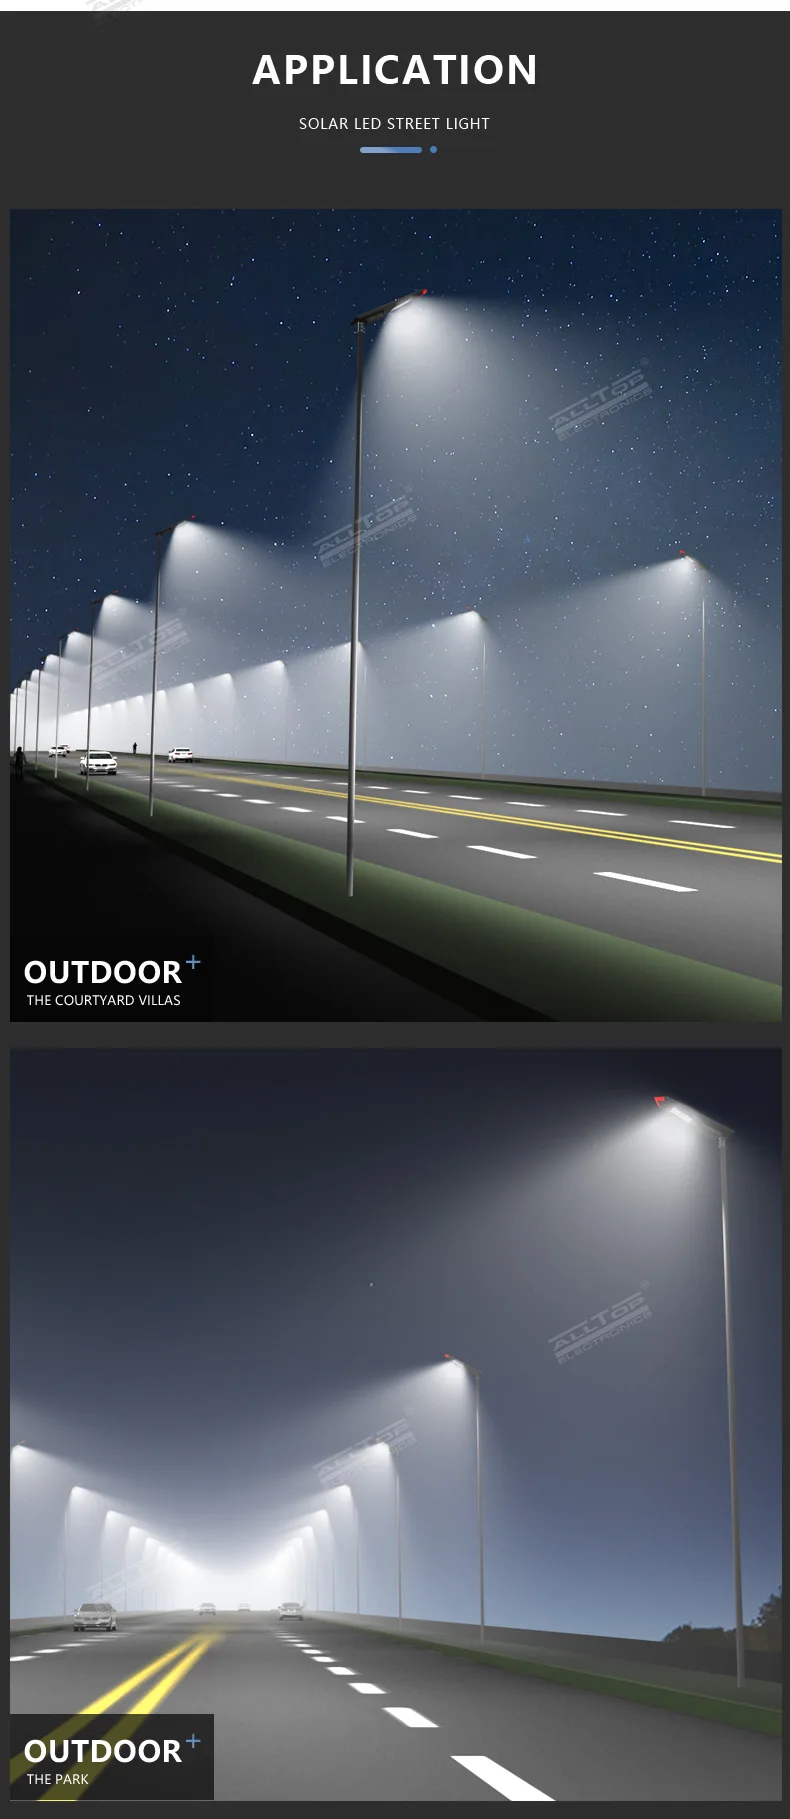 ALLTOP High lumen bridgelux smd outdoor waterproof ip65 150w integrated all in one solar led street light